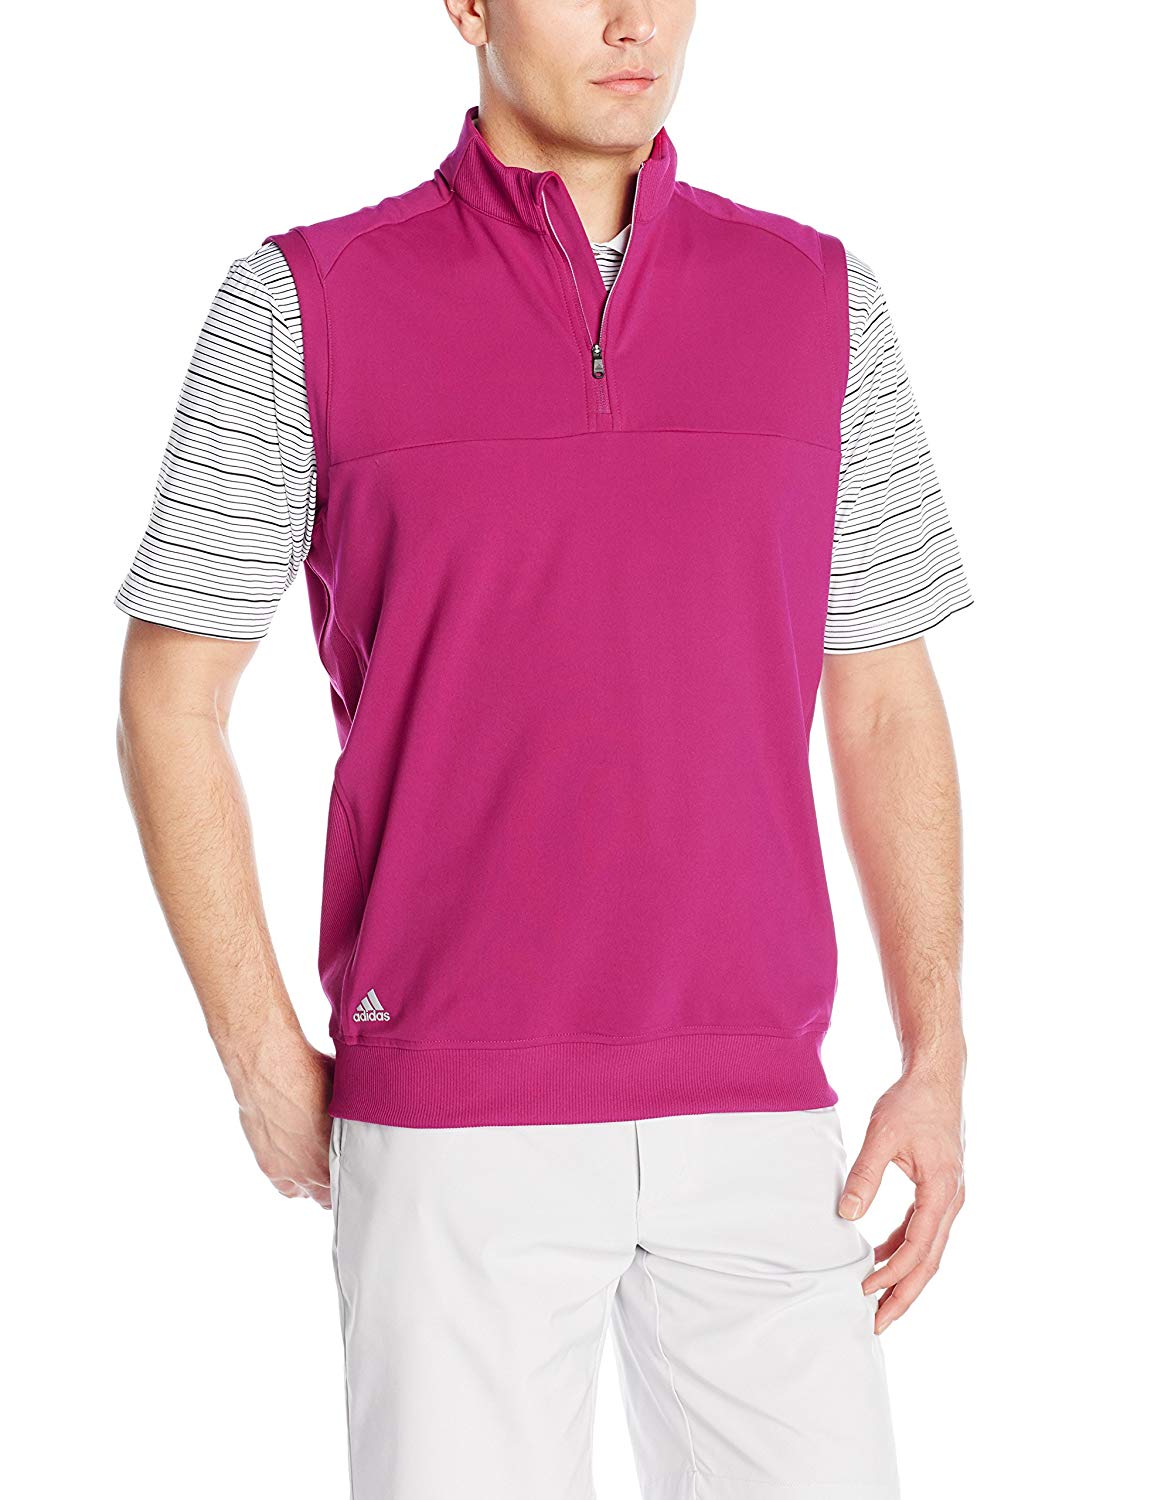 Adidas Mens Adi Club Golf Vests